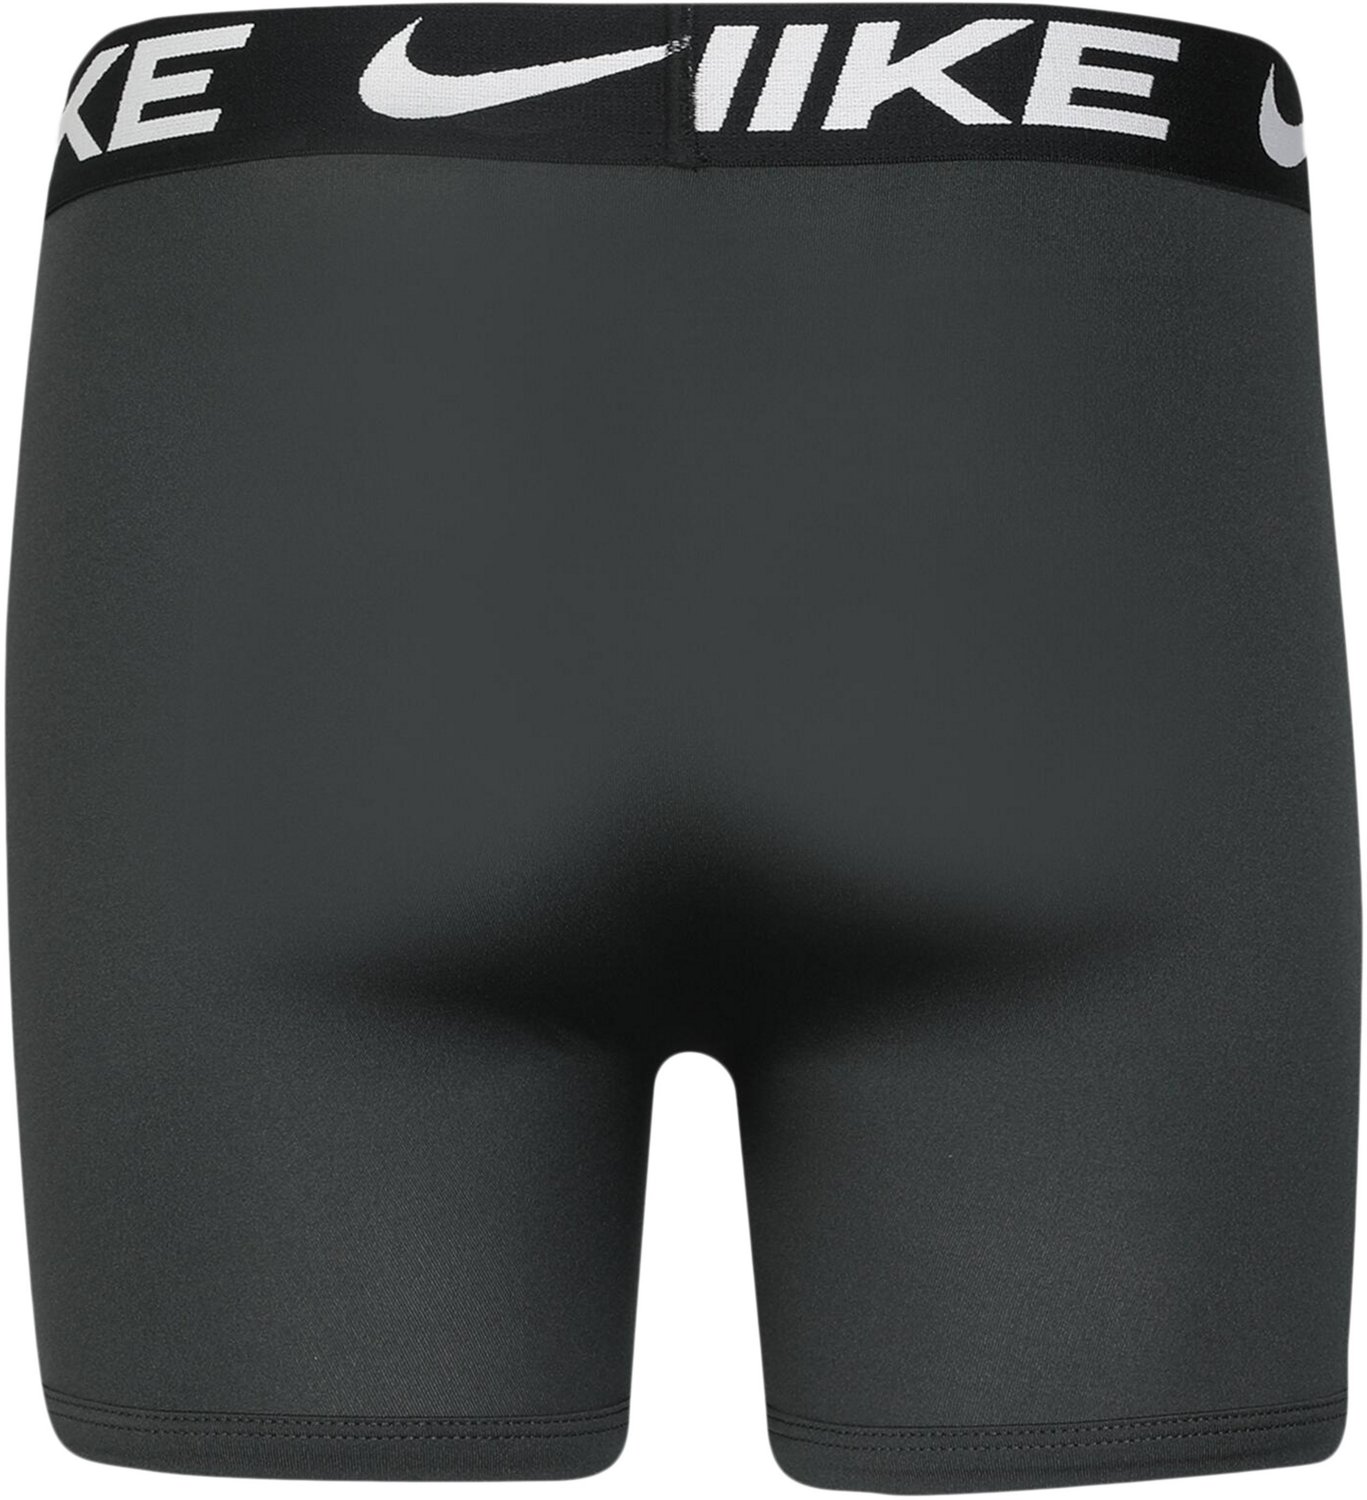 Pack of 3 men's black boxer shorts - NIKE - Pavidas